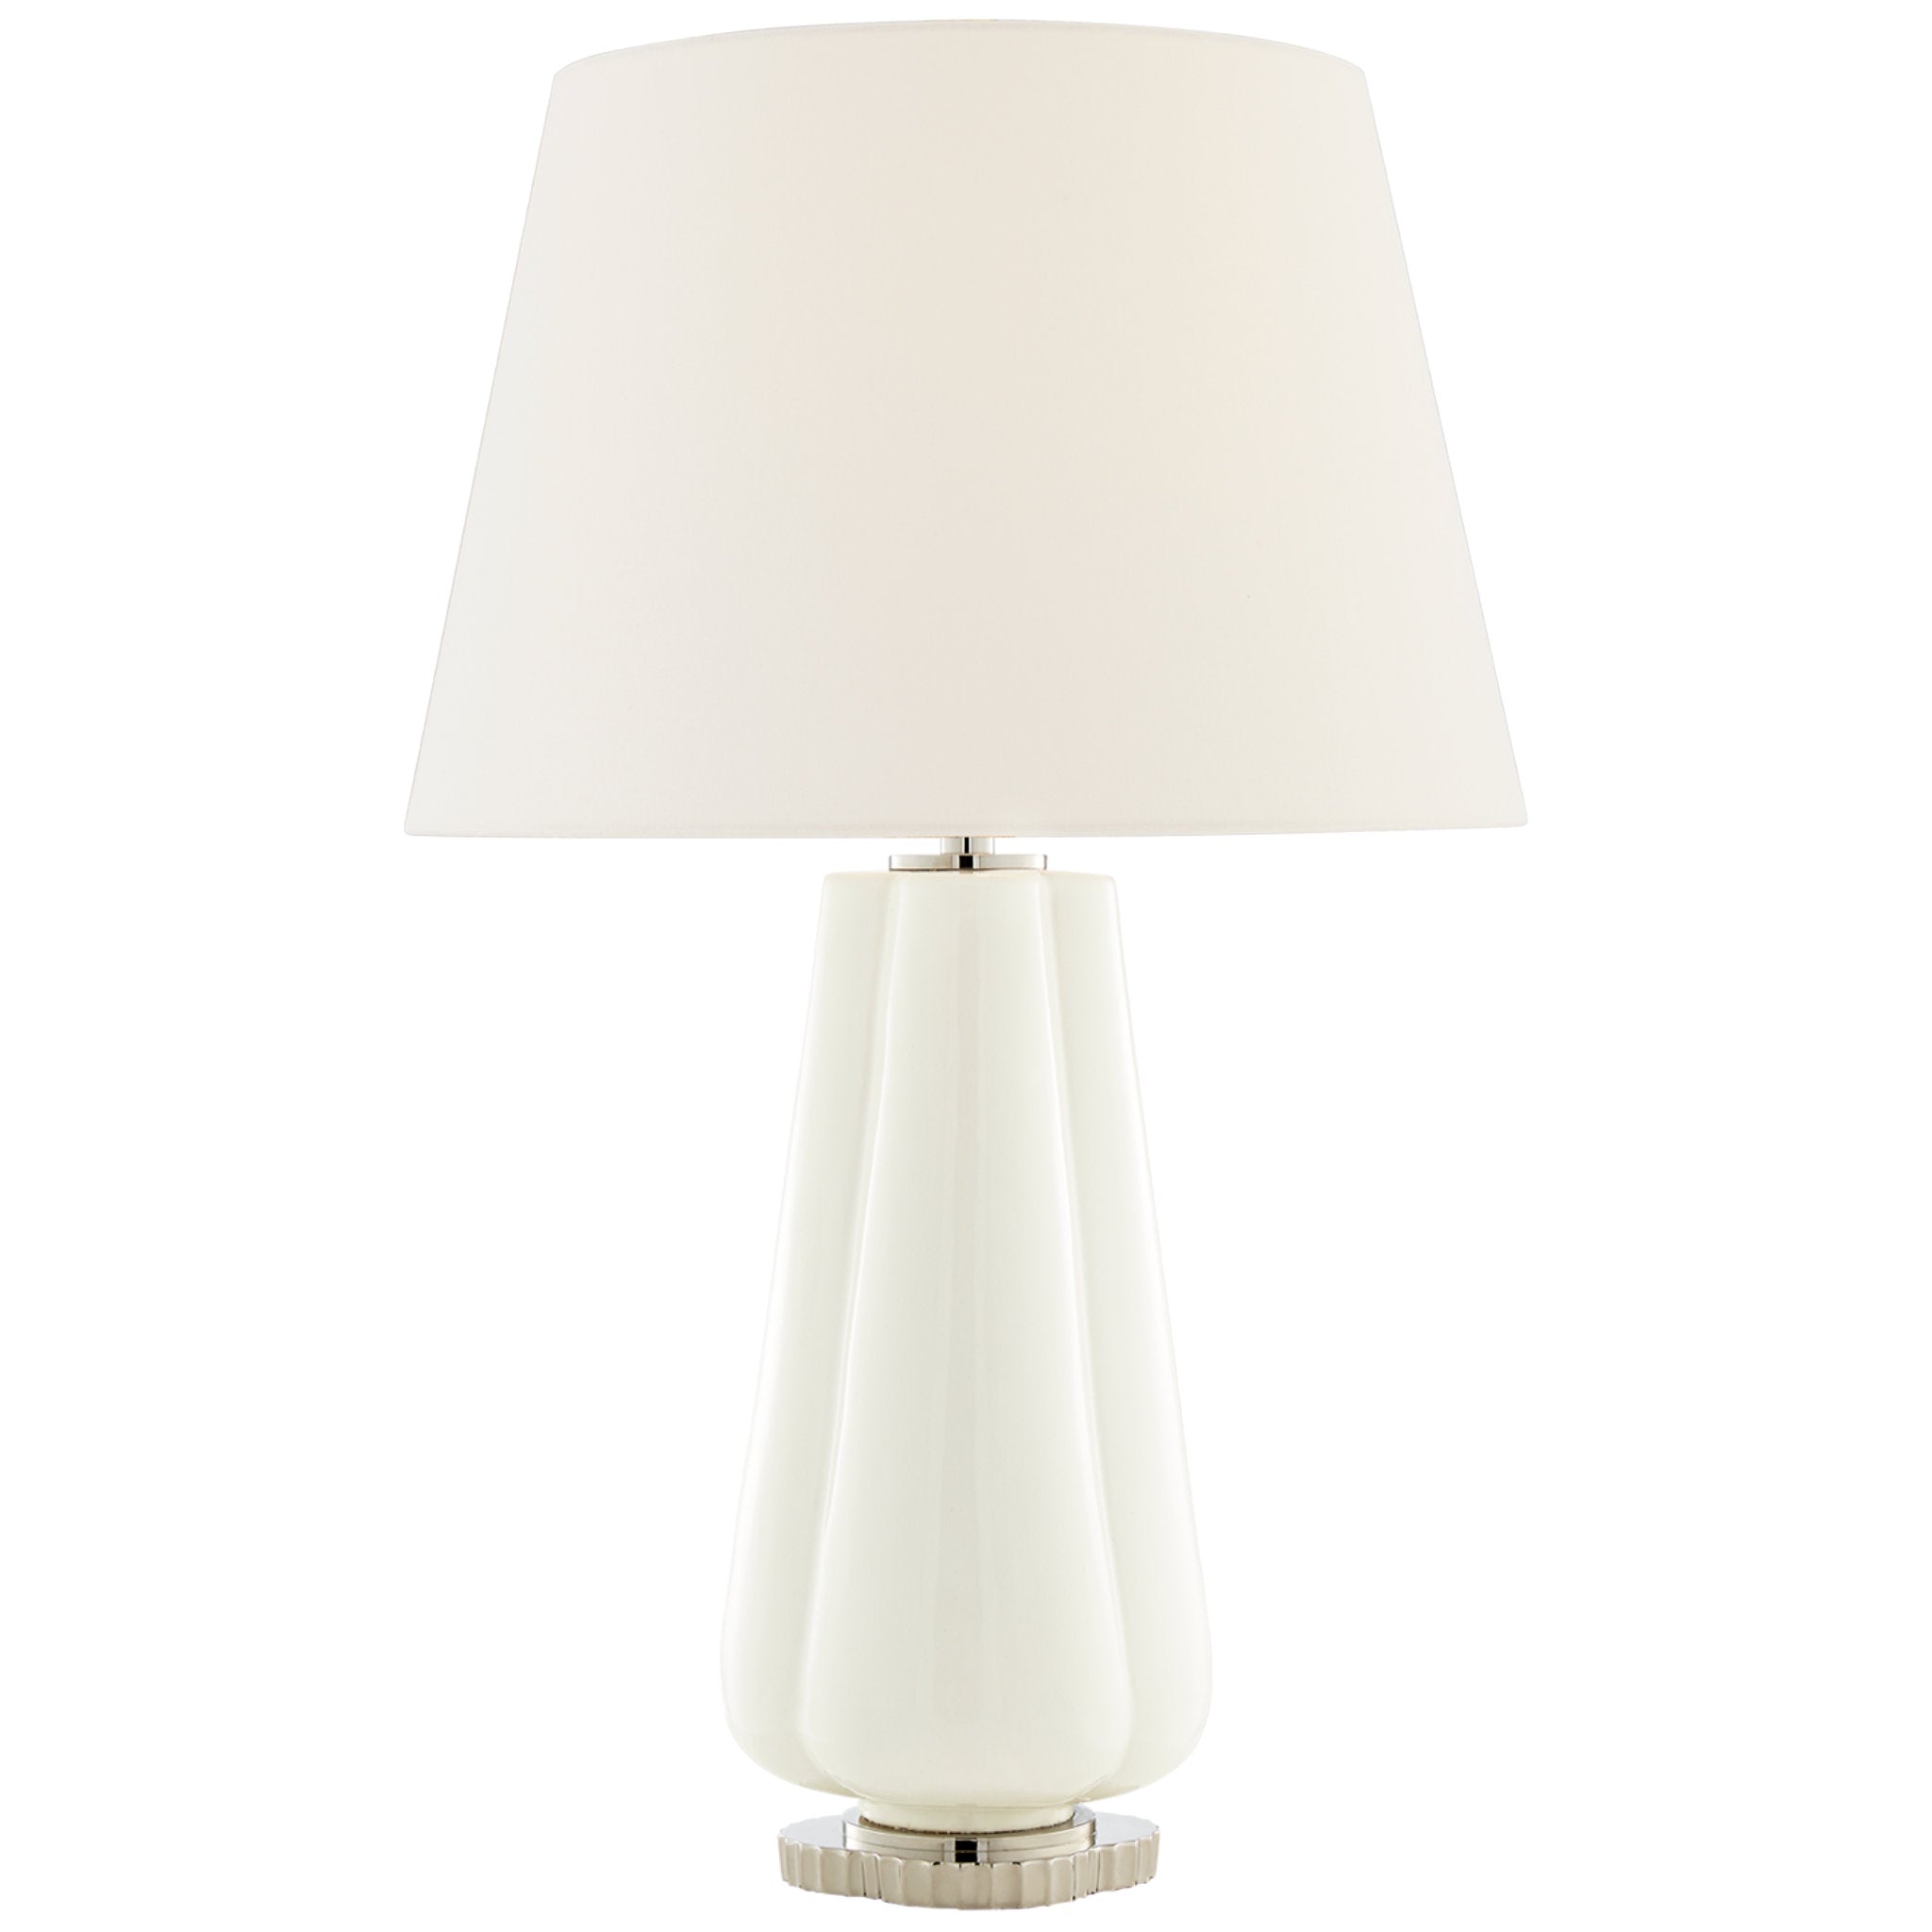 Alexa Hampton Penelope Table Lamp in White with Linen Shade